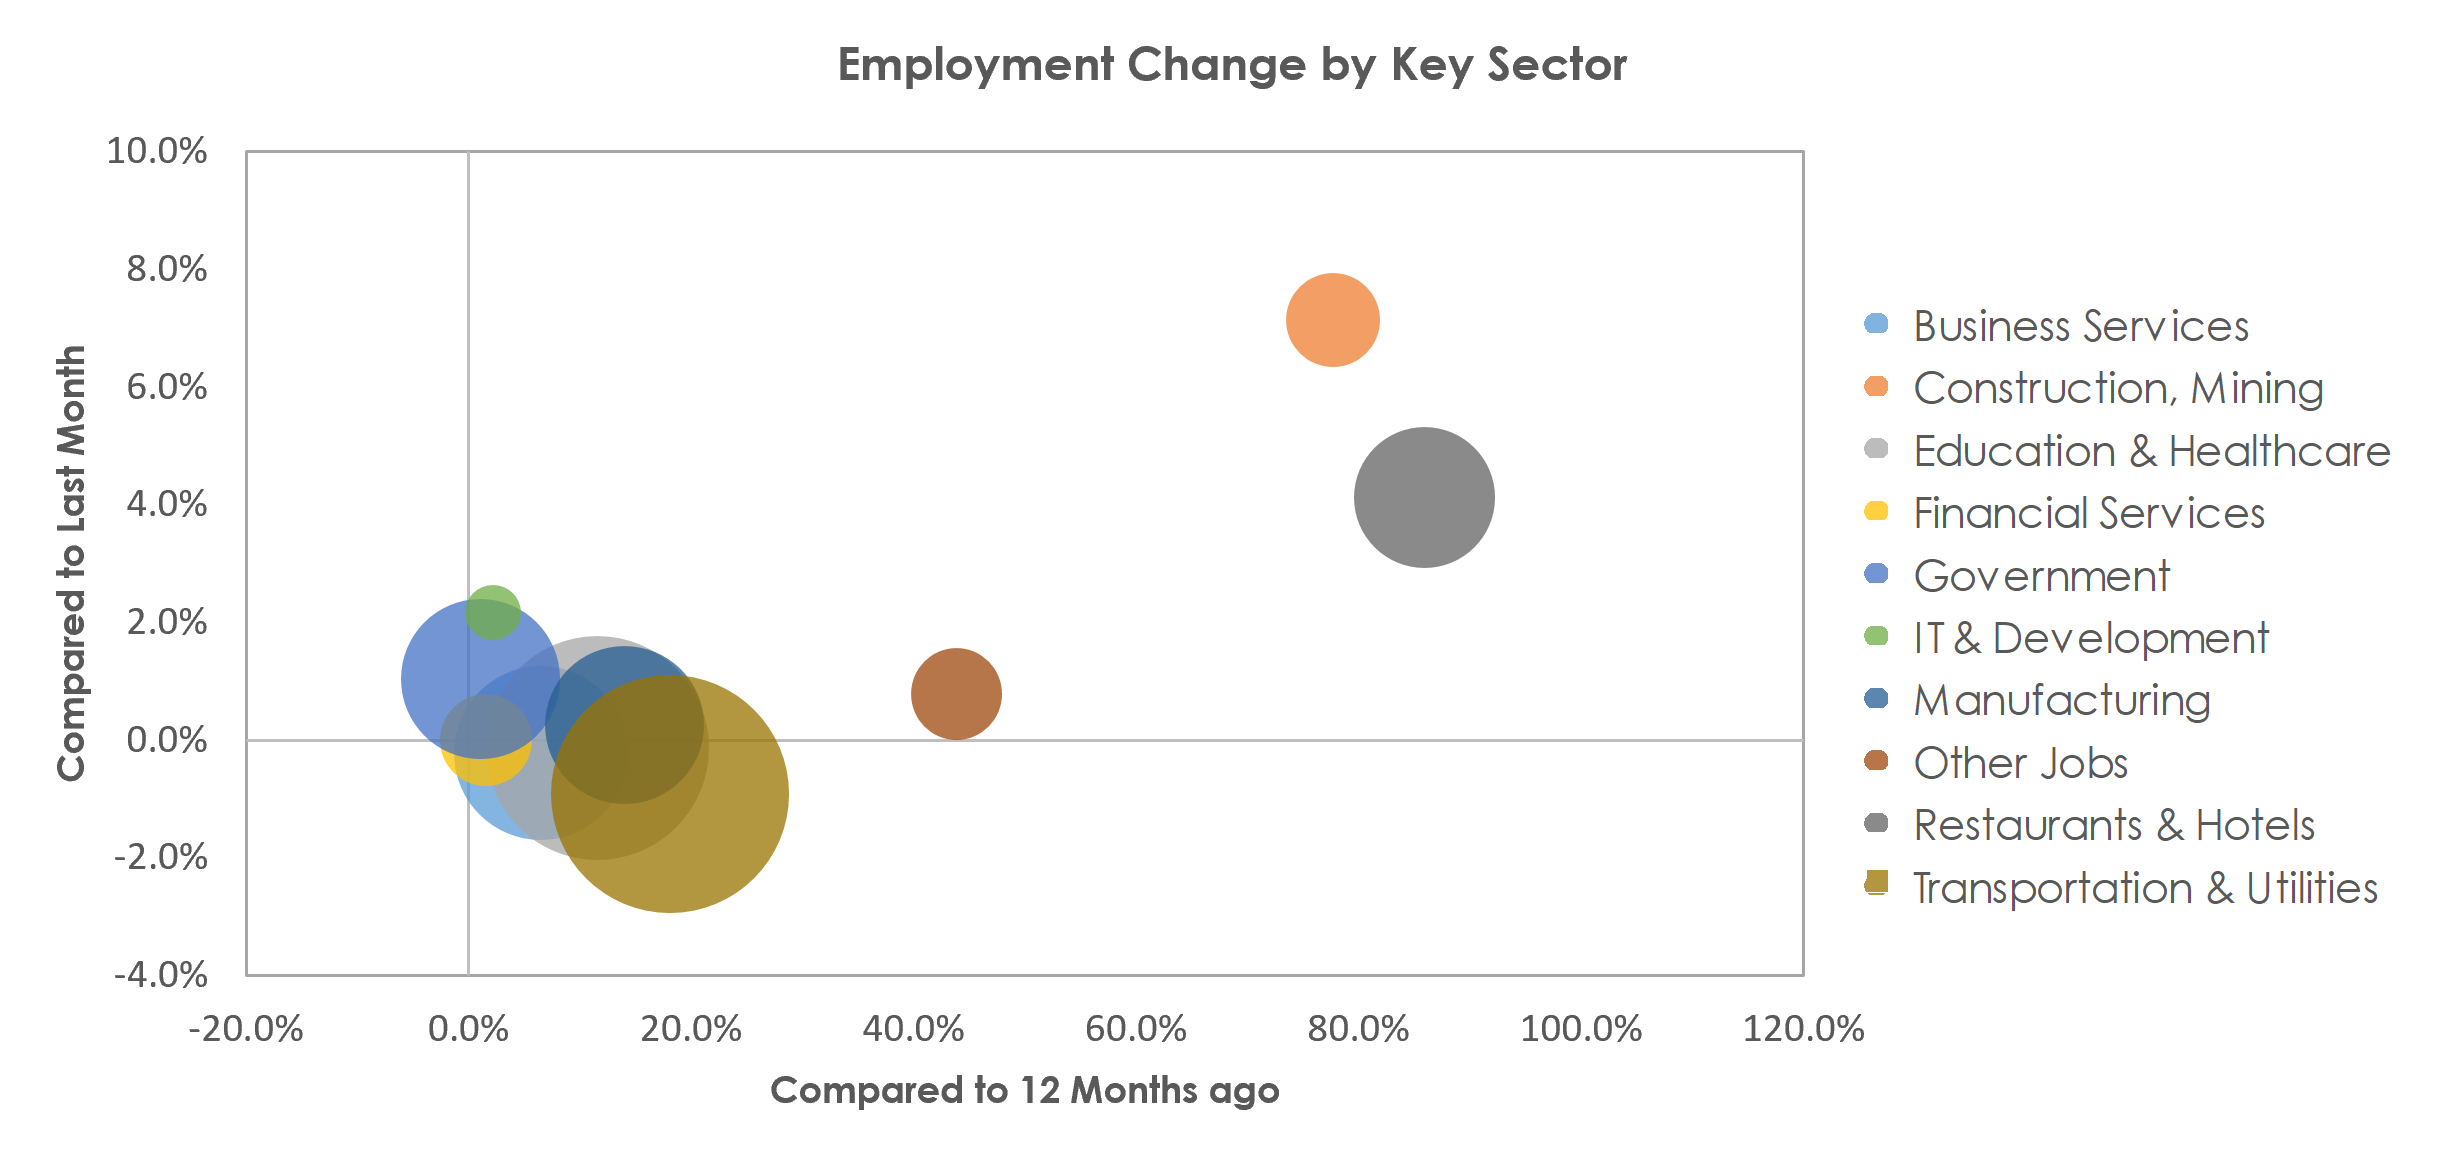 Allentown-Bethlehem-Easton, PA-NJ Unemployment by Industry April 2021